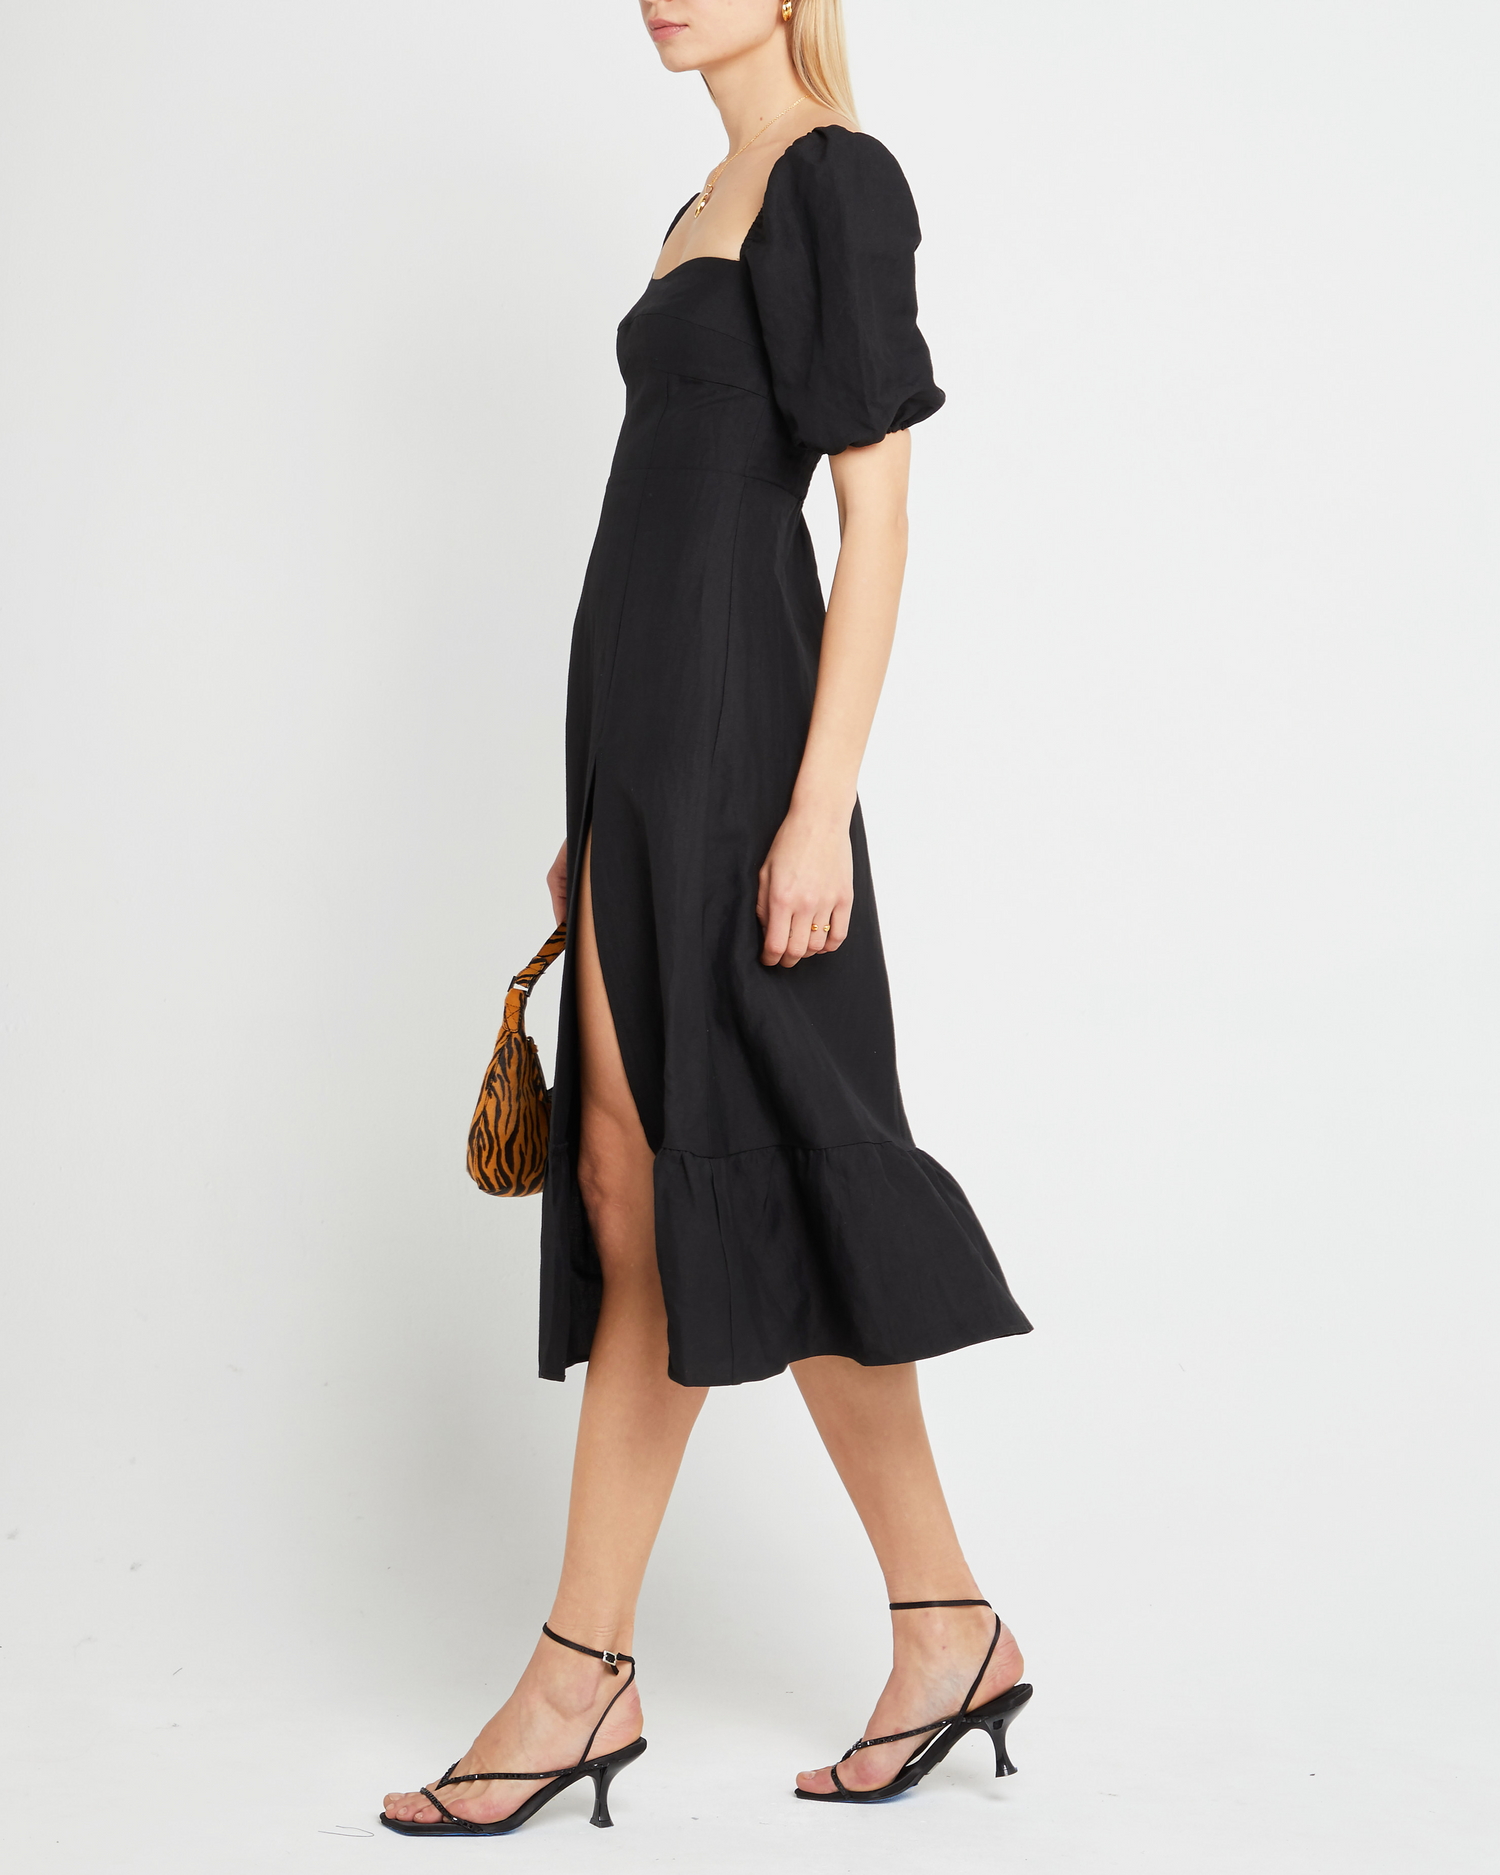 Fourth image of Violetta Midi Dress, a black midi dress, sweetheart neckline, short sleeves, puff sleeves, side slit